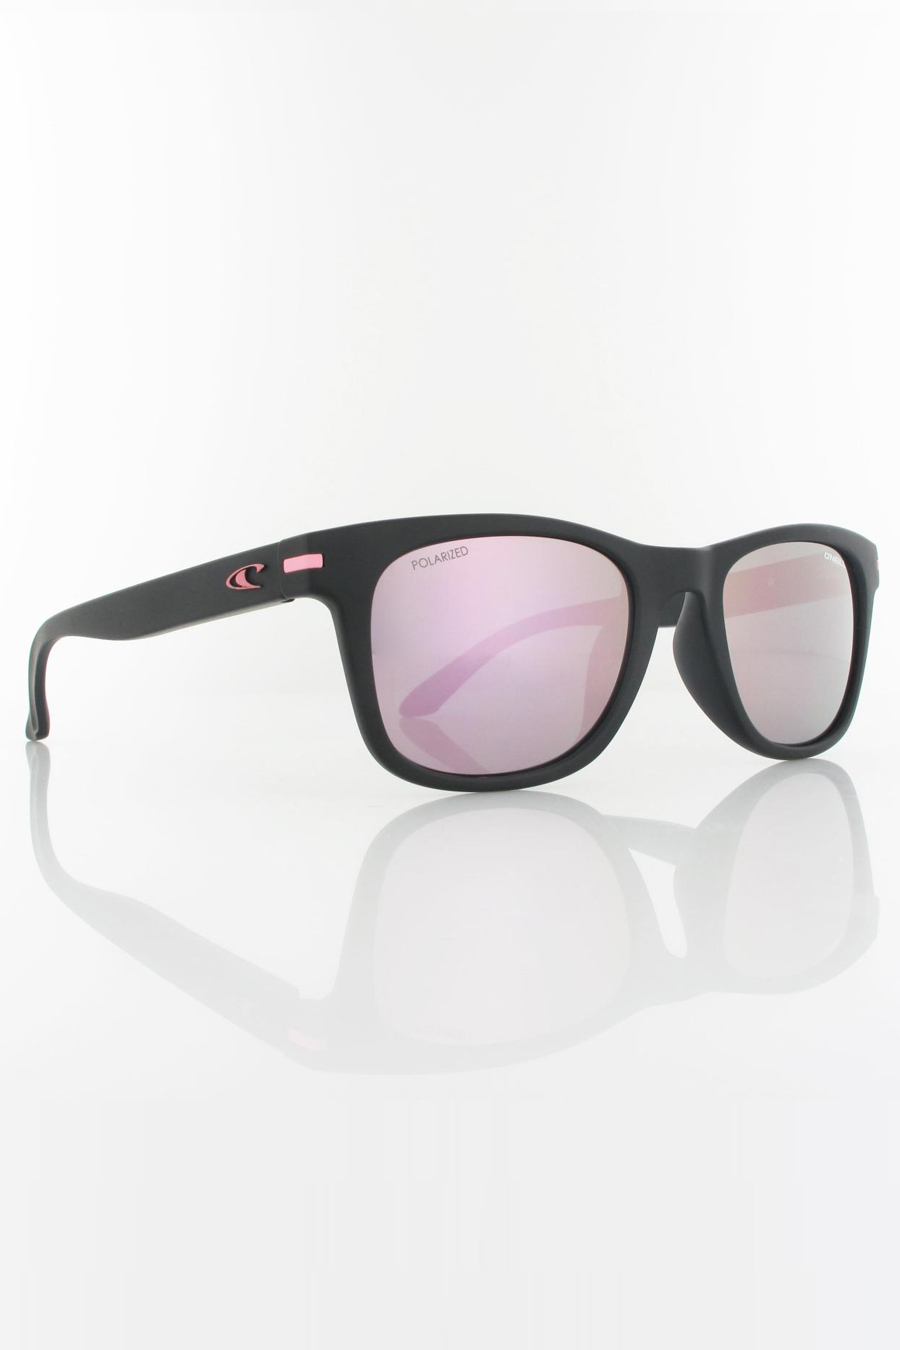 Солнечные очки ONEILL ONS-9030-20-104P